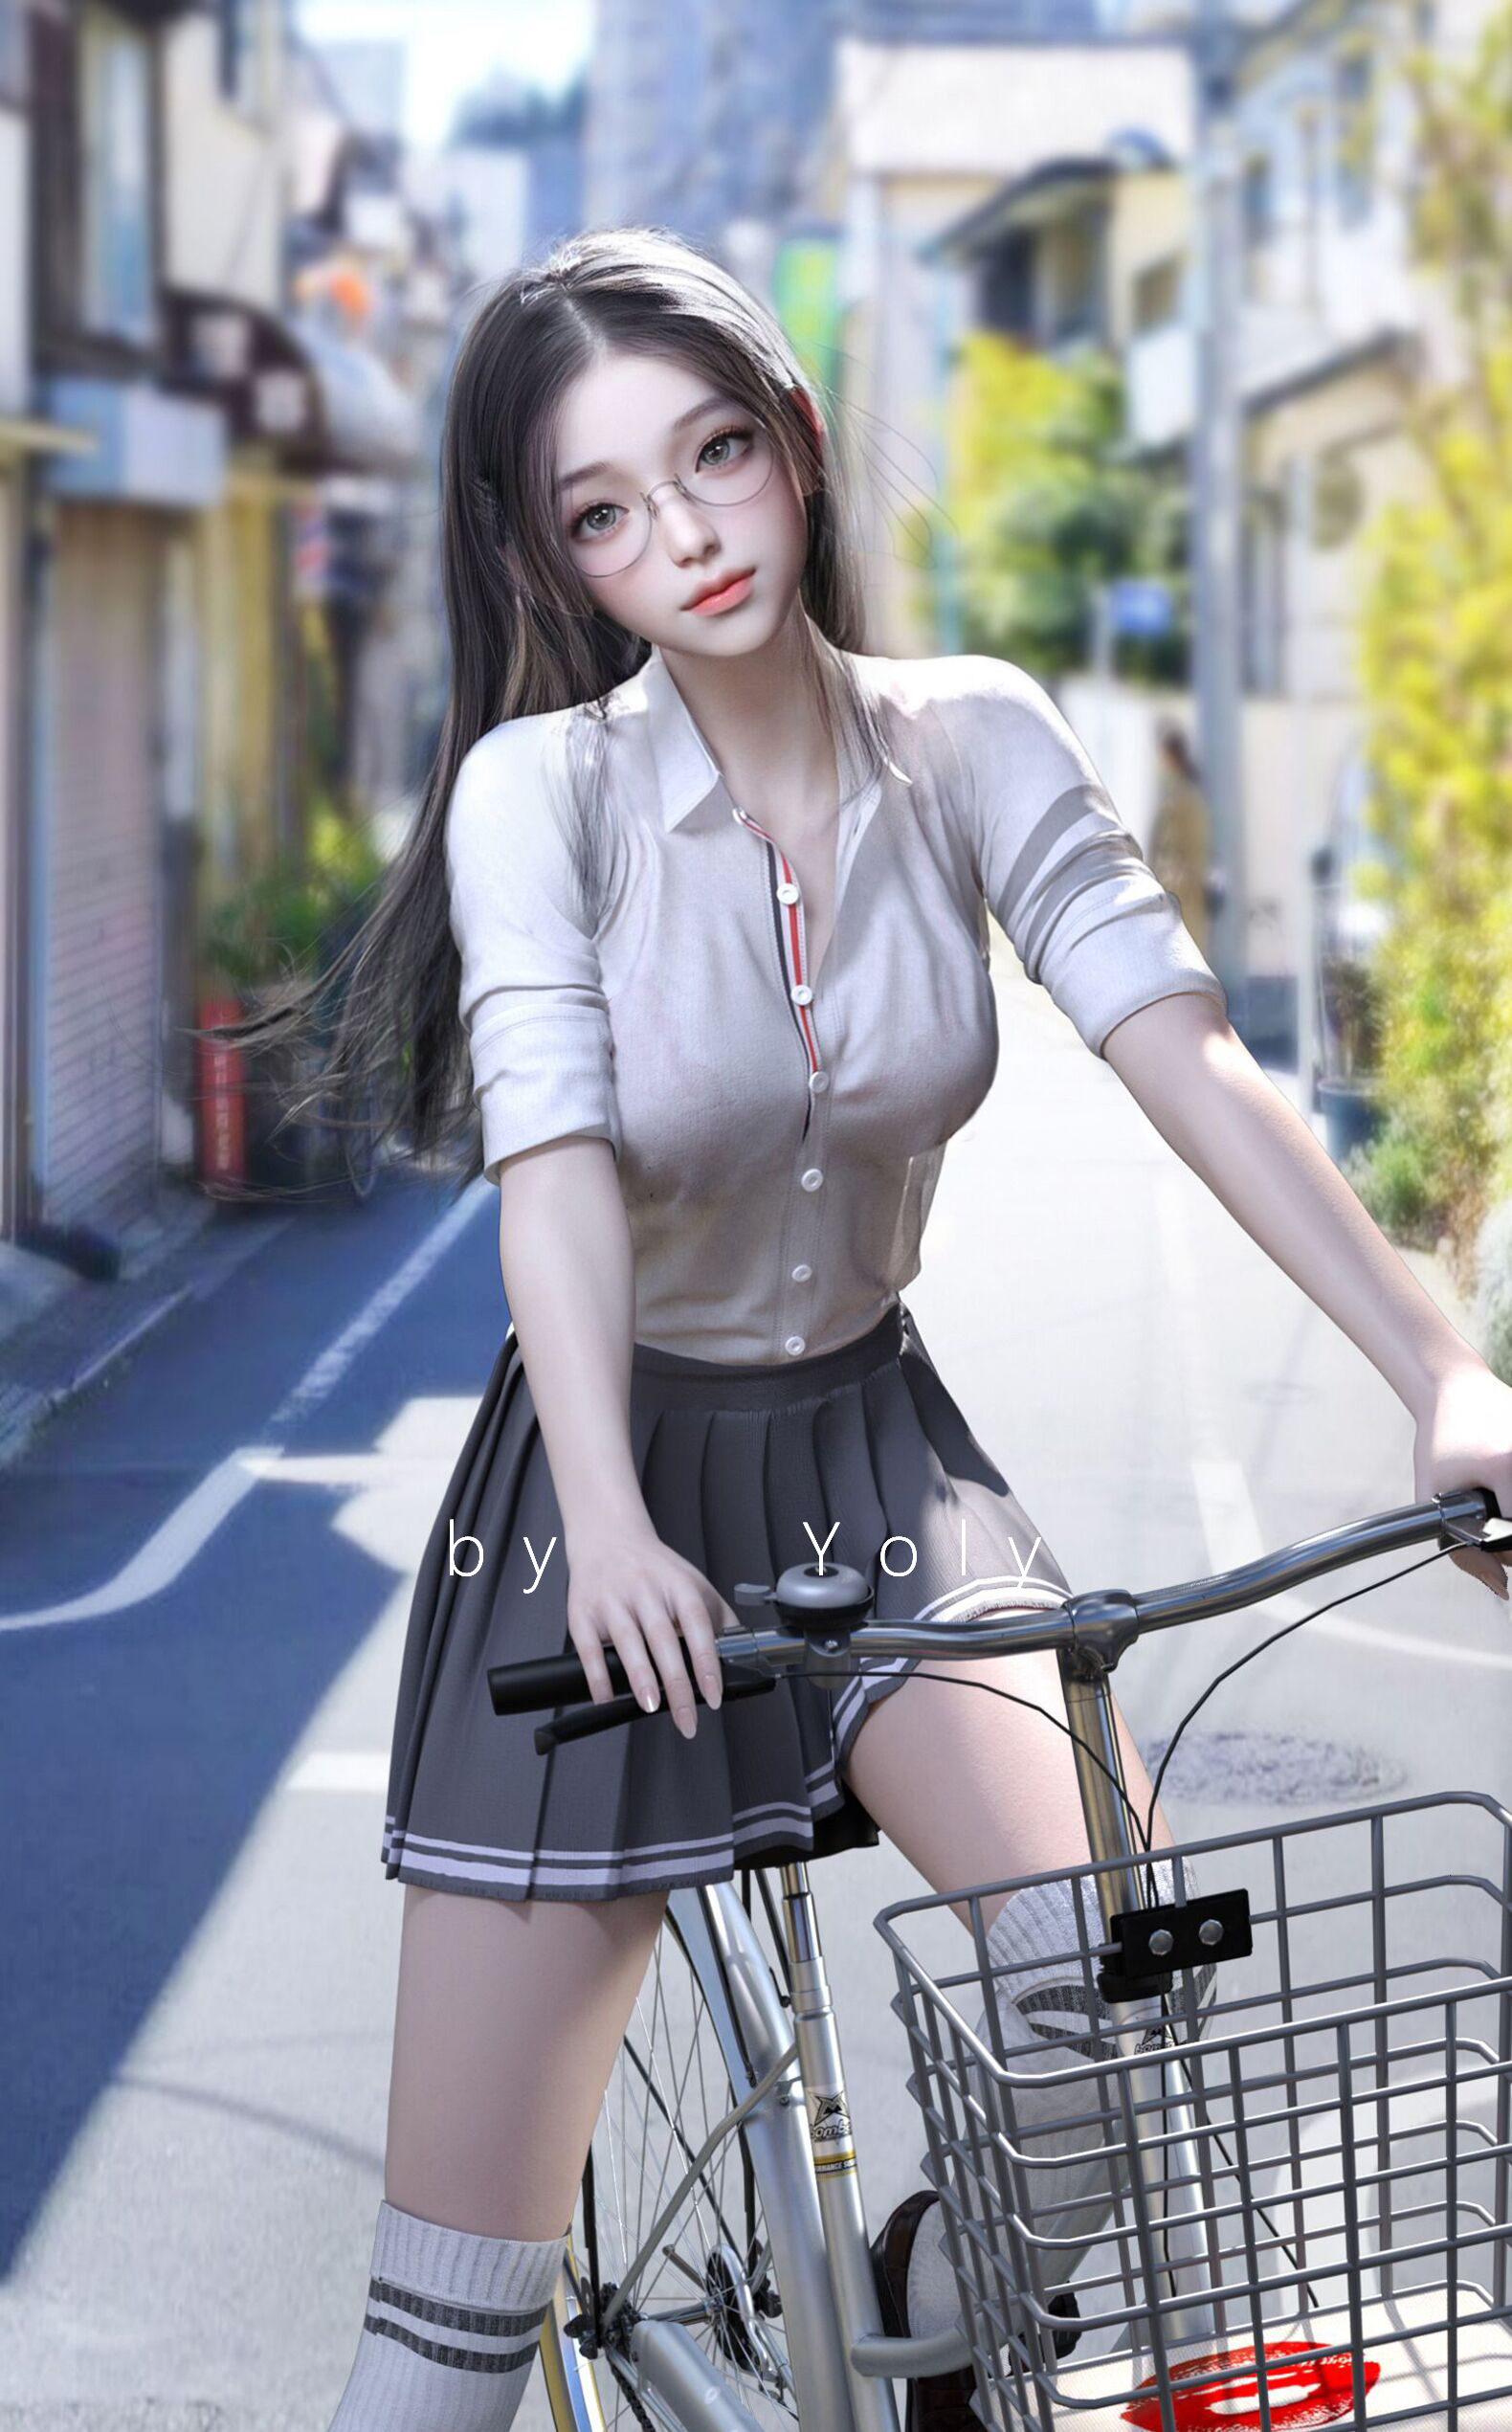 Yoly School Skirt School Uniform Schoolgirl Bicycle JK Model CGi Digital Art Fantasy Girl Fantasy Ar 1580x2541